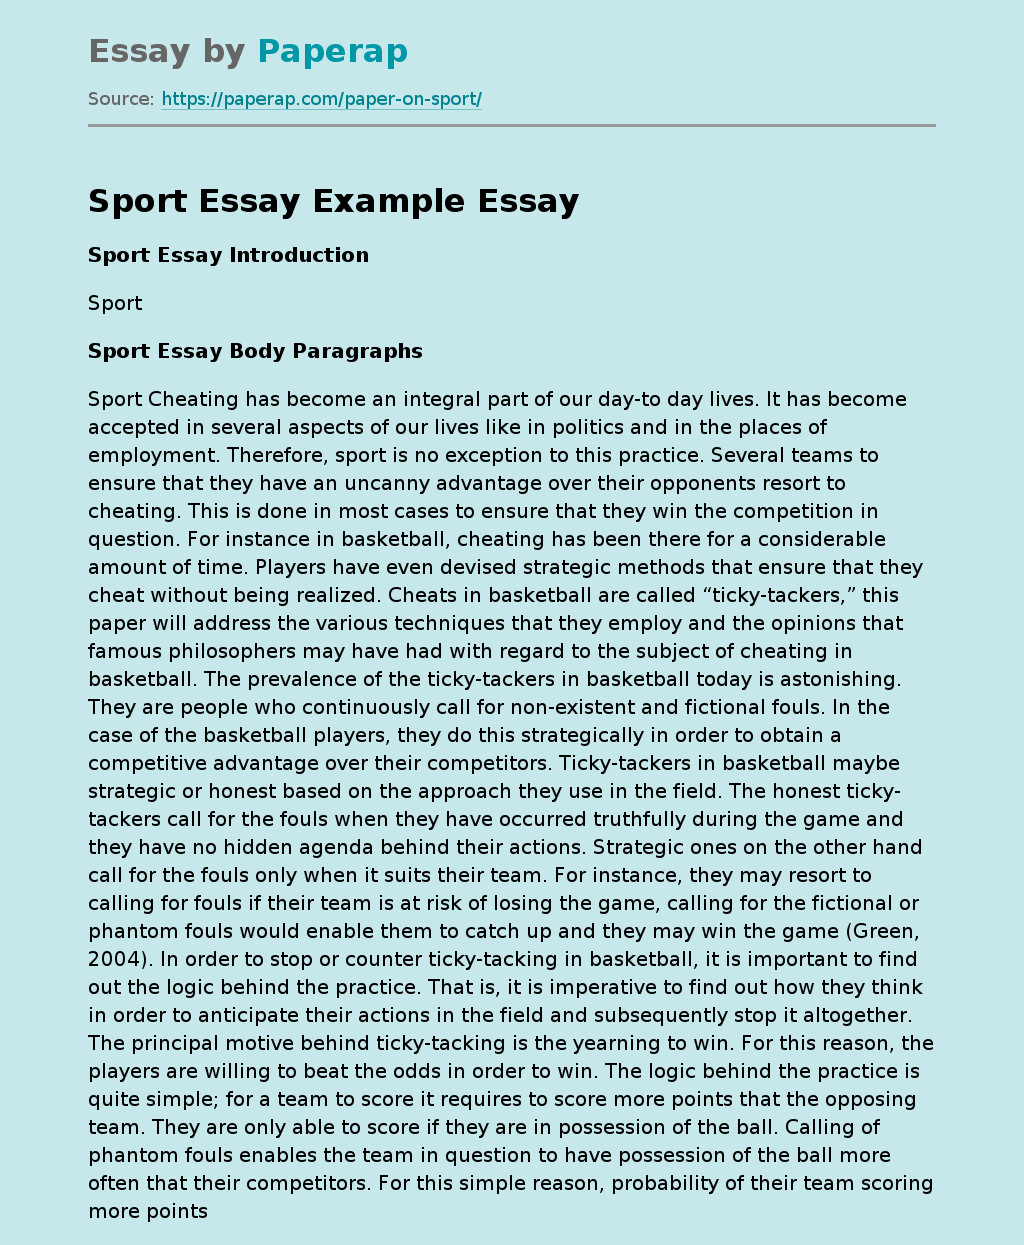 Sport Cheating Essay Example